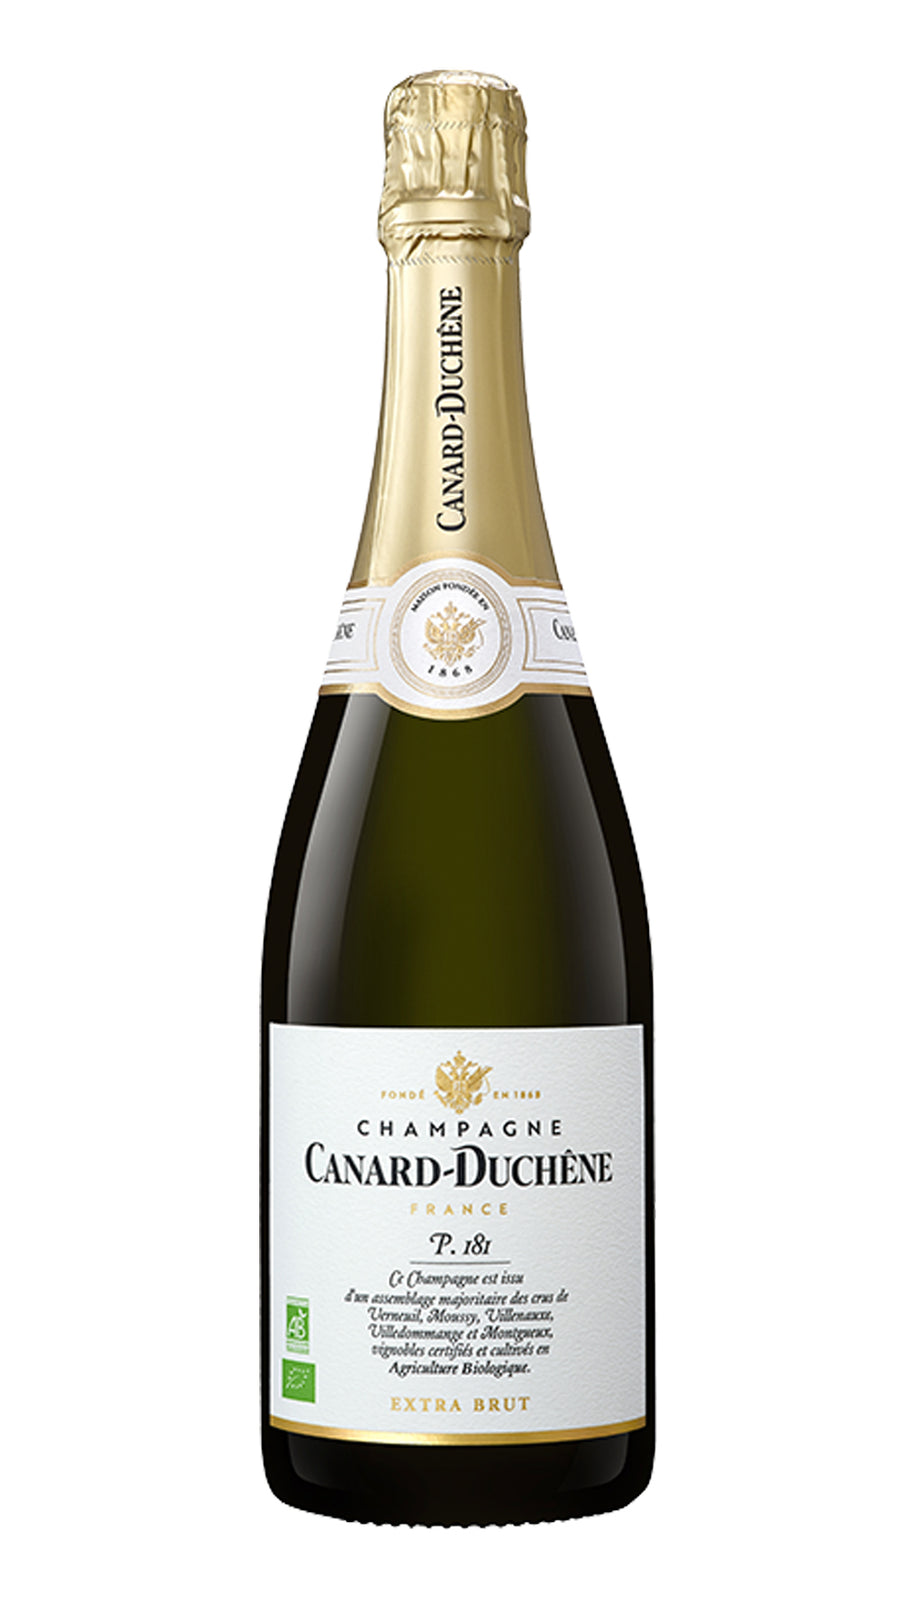 Canard-Duchene Champagne P181 Extra Brut